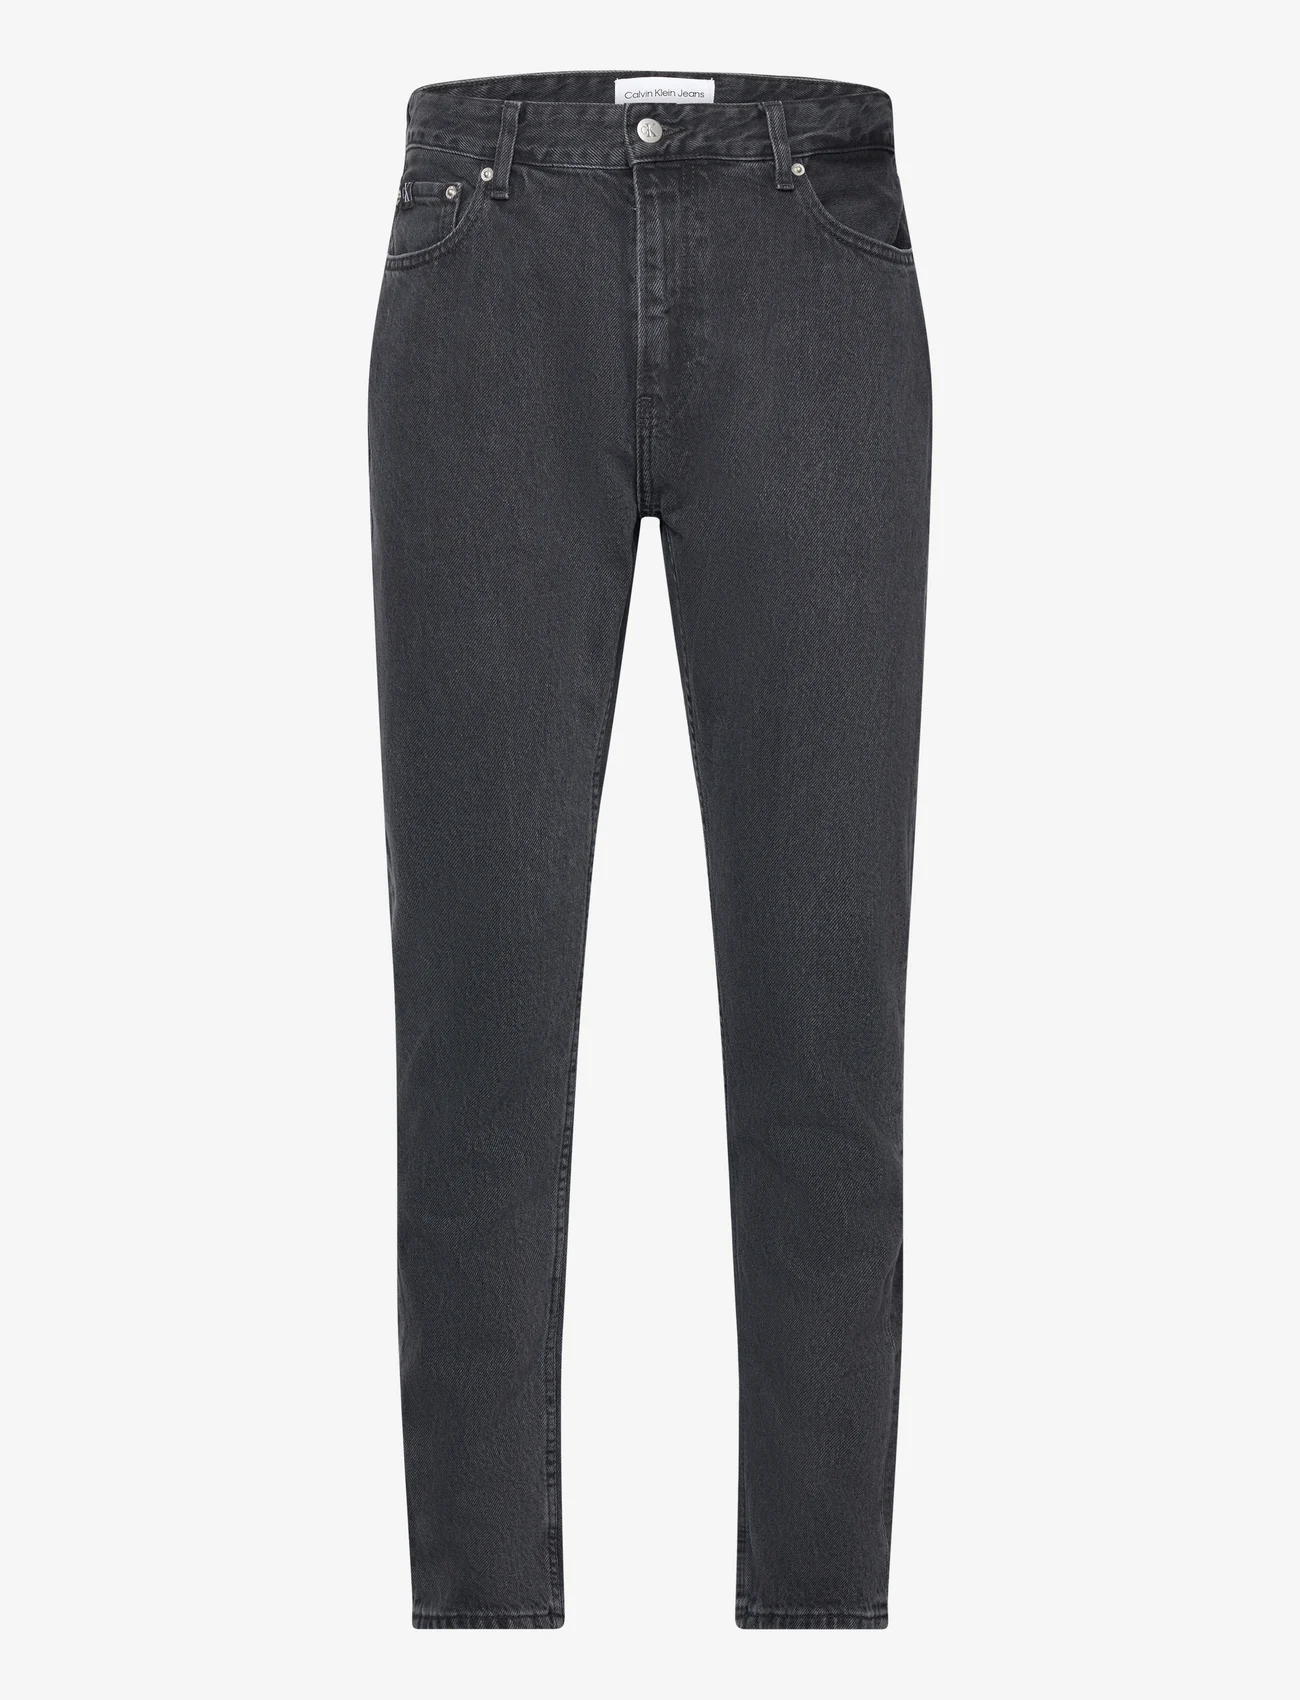 Calvin Klein Jeans - DAD JEAN - tapered jeans - denim black - 0